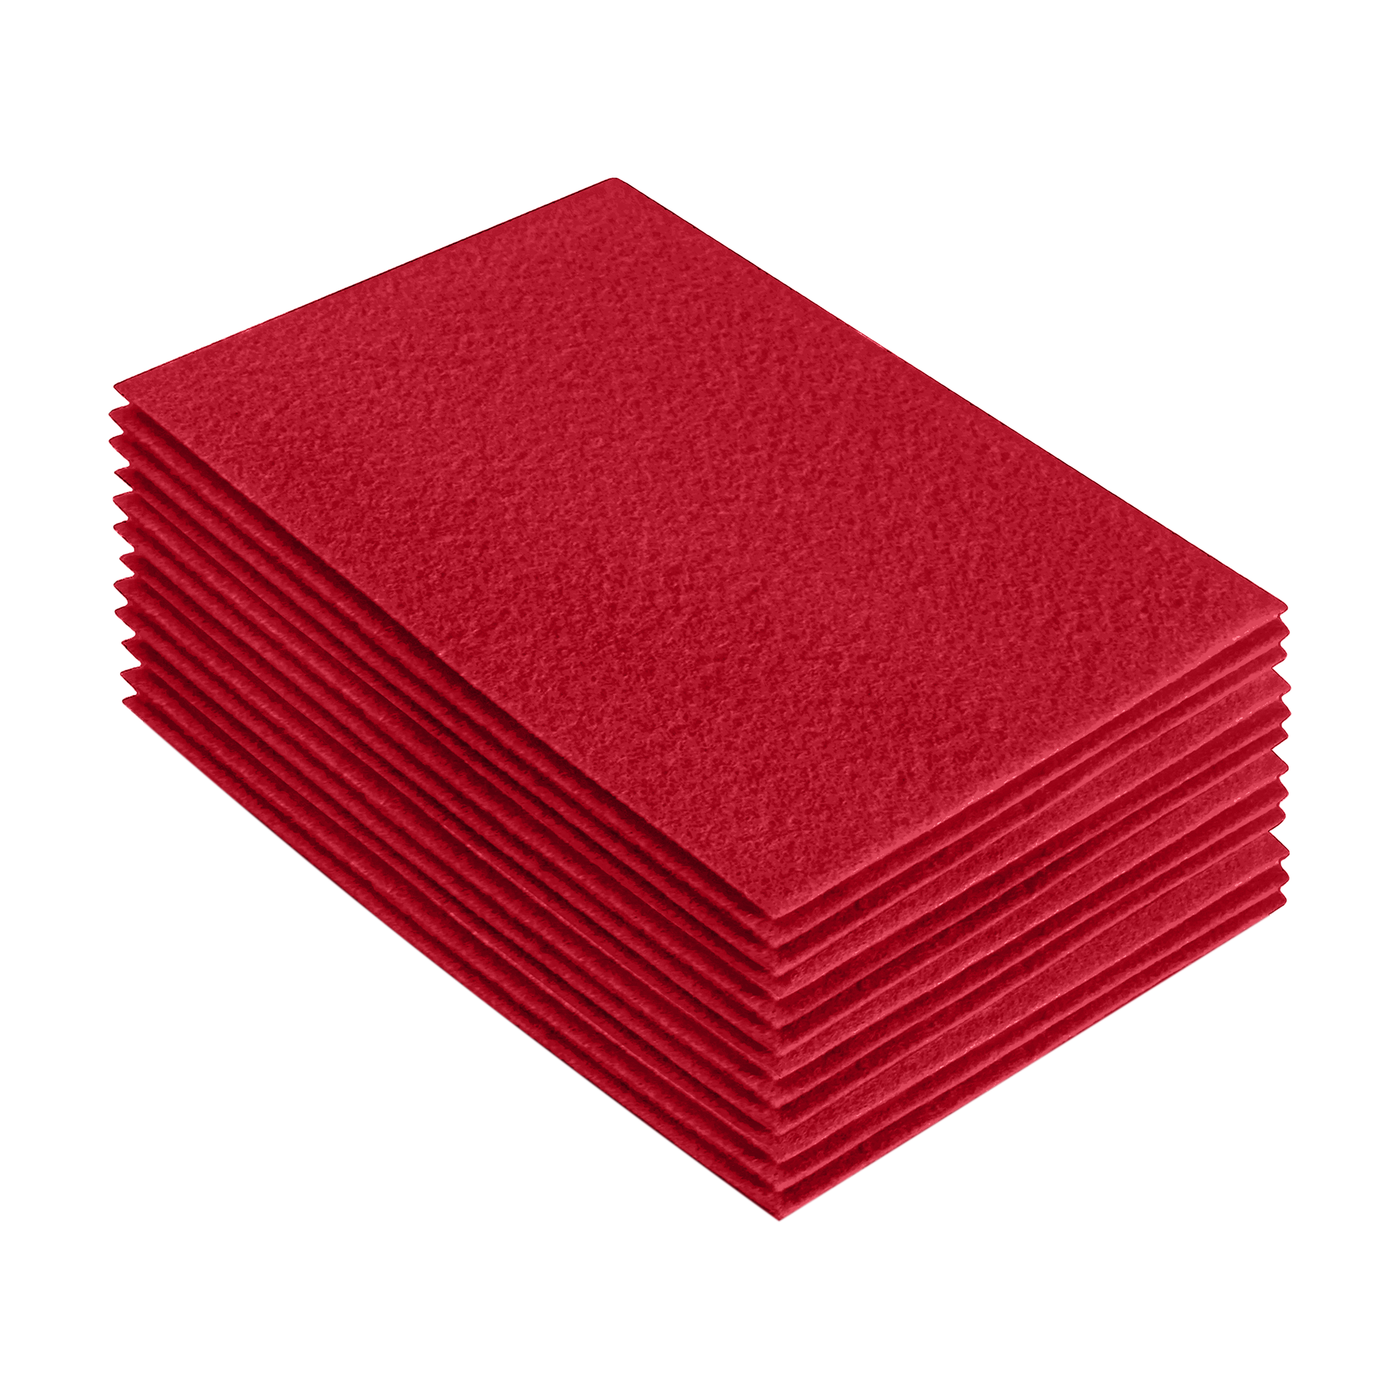 Acrylic Felt 9"X12" Sheet Packs | Red - FabricLA.com